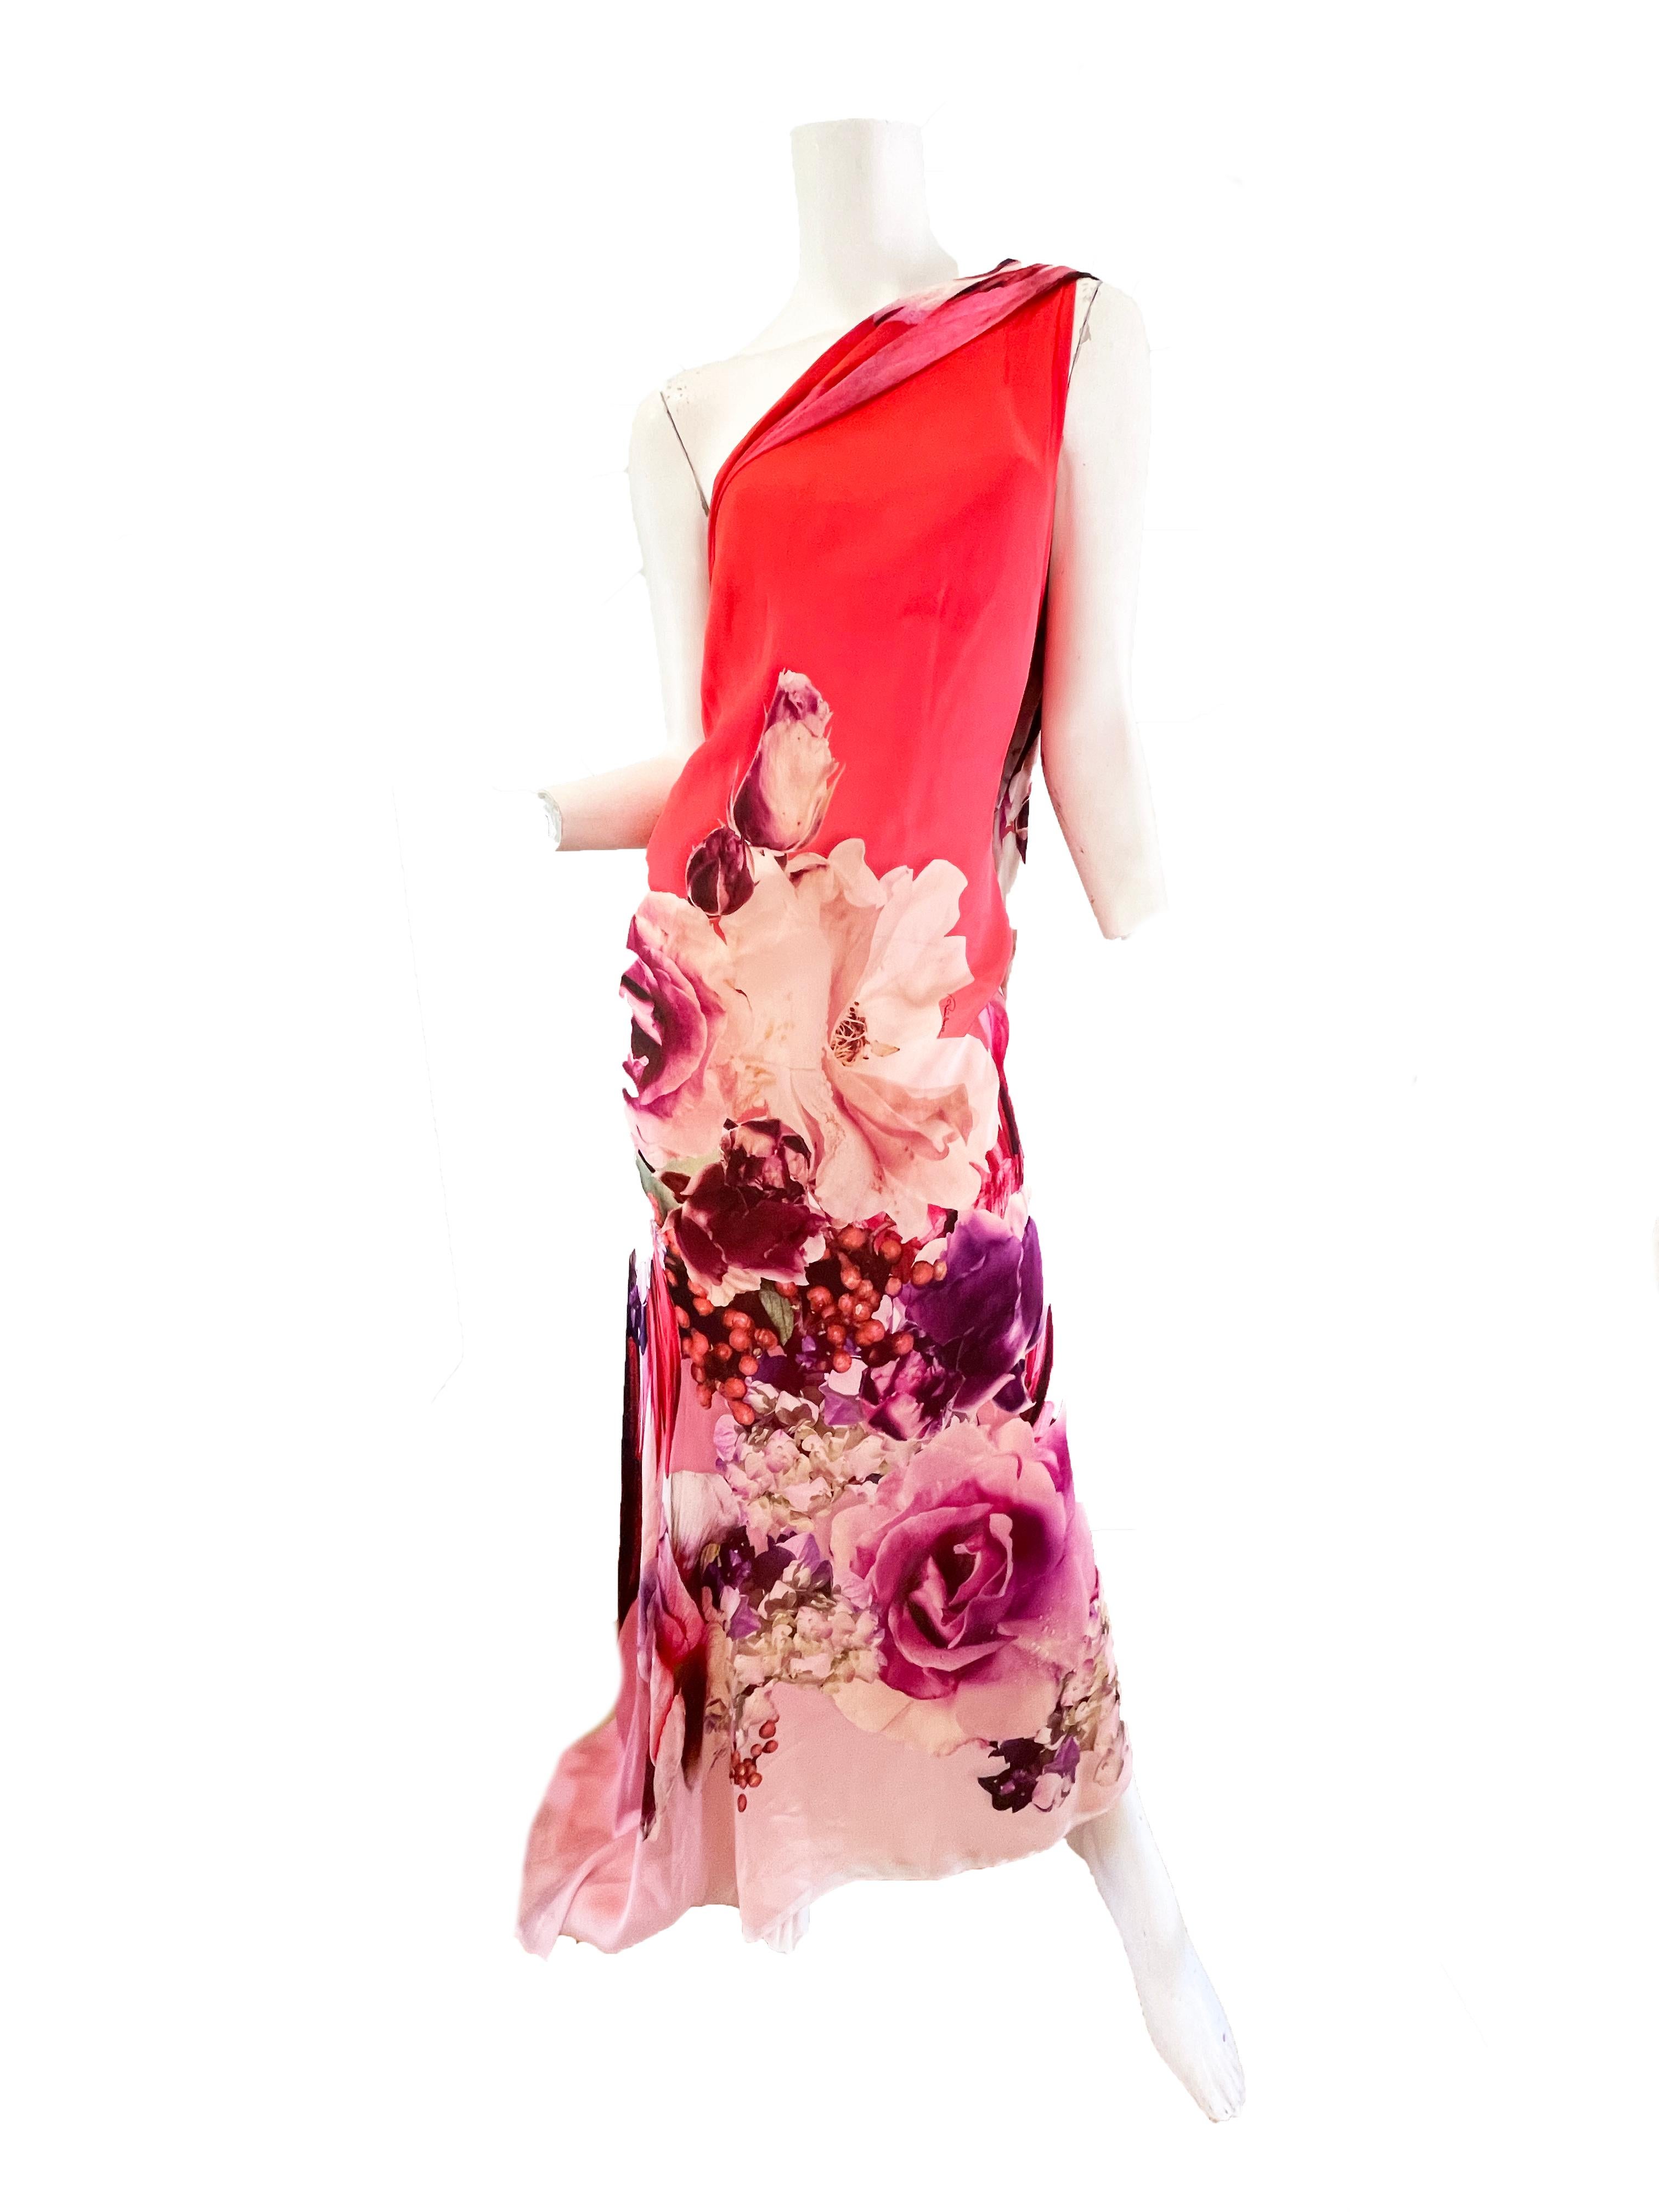 Roberto Cavalli Silk One Shoulder Gown. Condition: Excellent
Size S / US4 / IT40

24.5